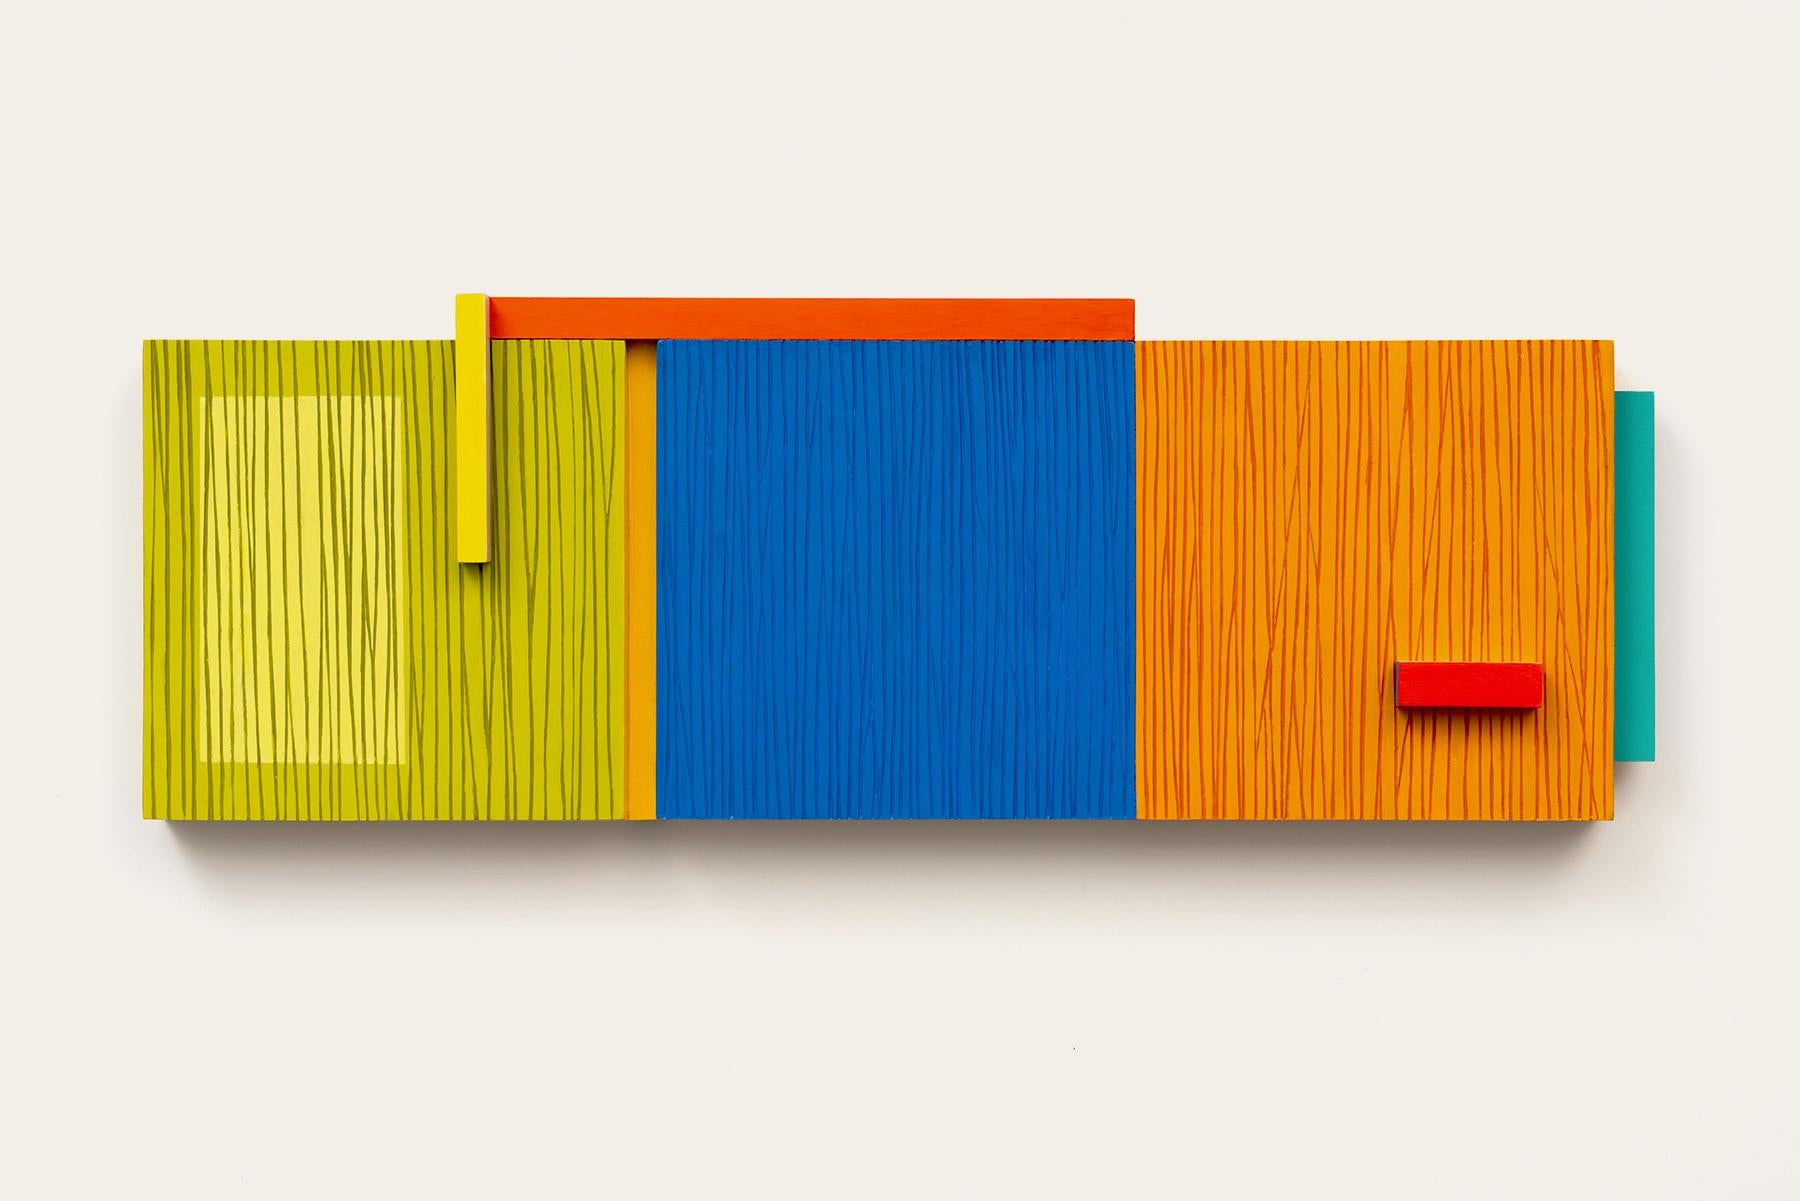 Abstract Sculpture Terri Fridkin - Toutes inclusives - Sculpture murale abstraite - jaune, bleu, orange, minimalisme